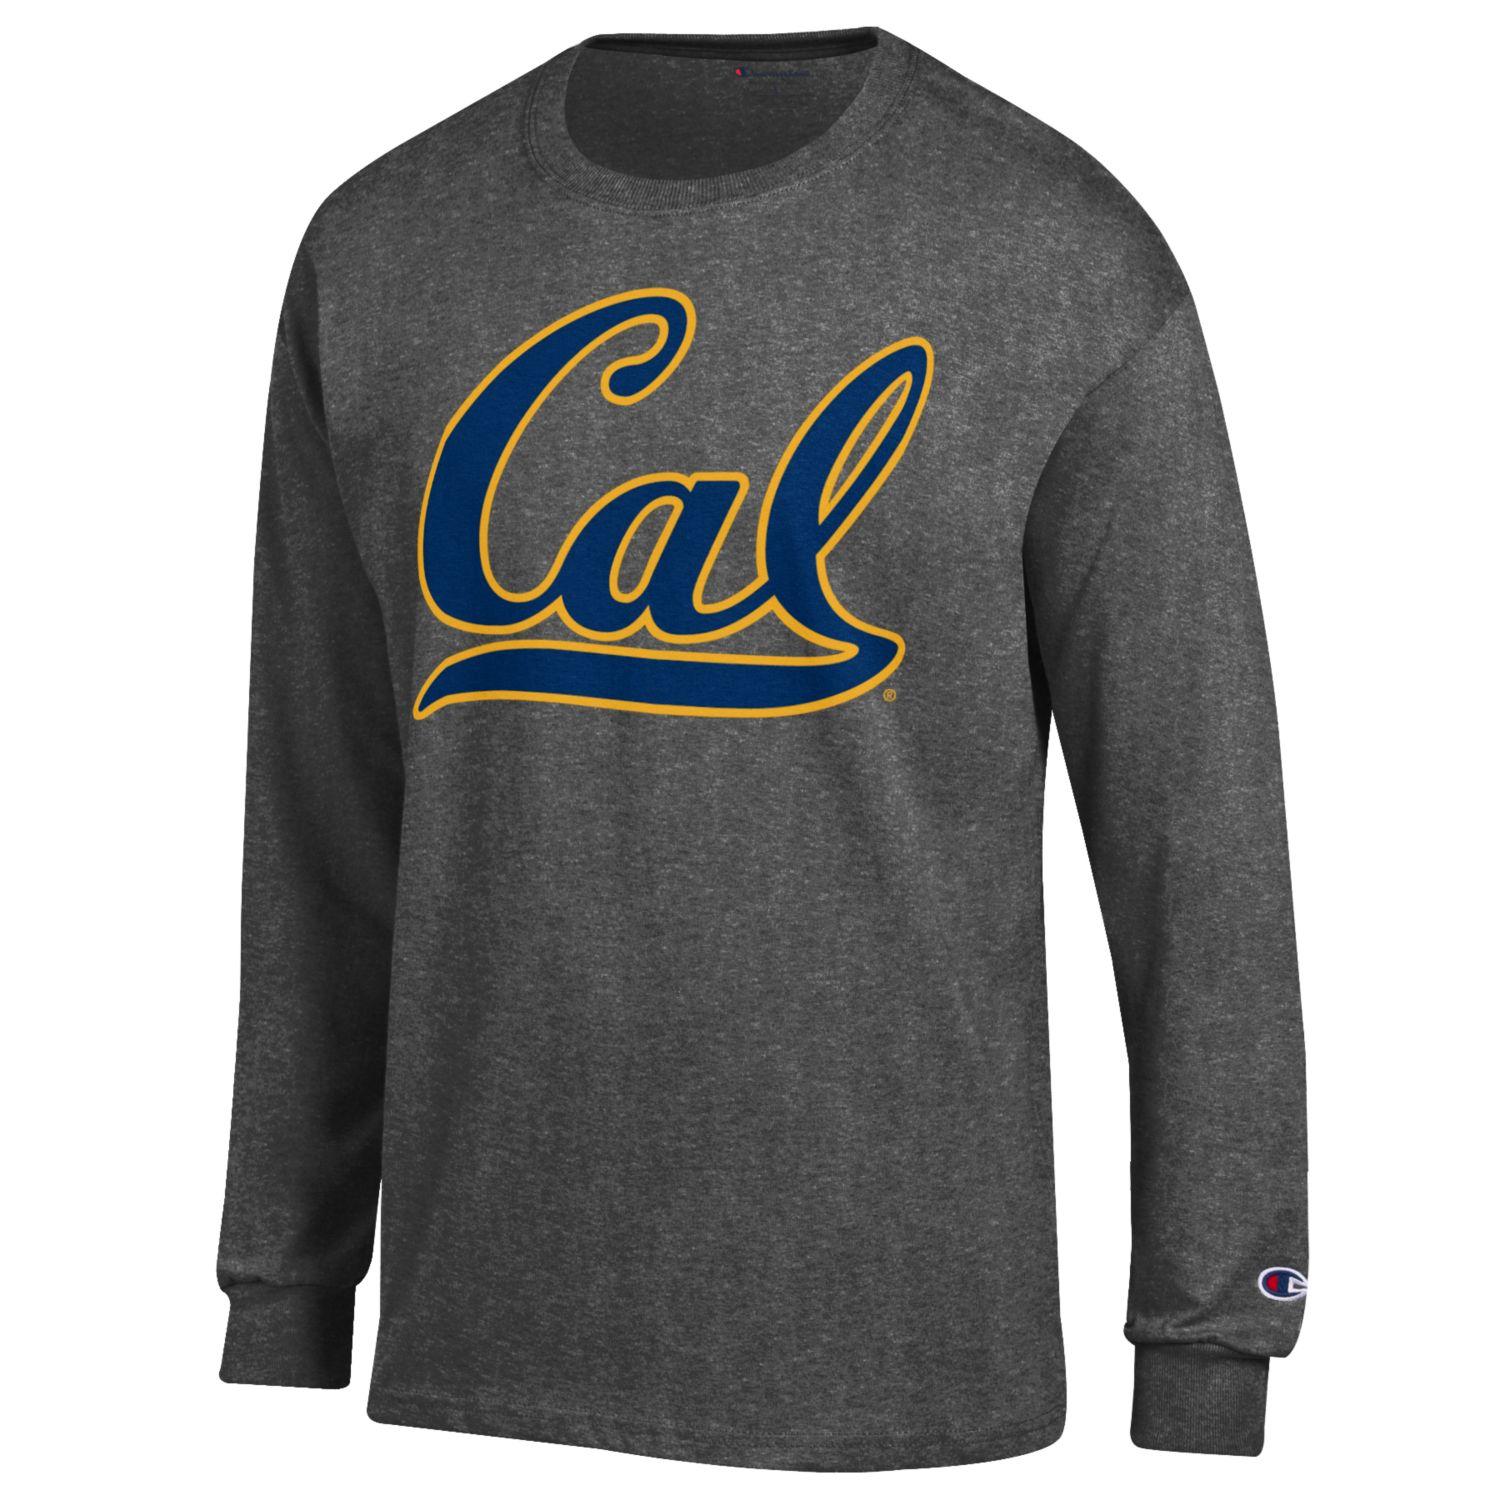 U.C. Berkeley bold Cal long sleeve Champion T-Shirt-Charcoal-Shop College Wear